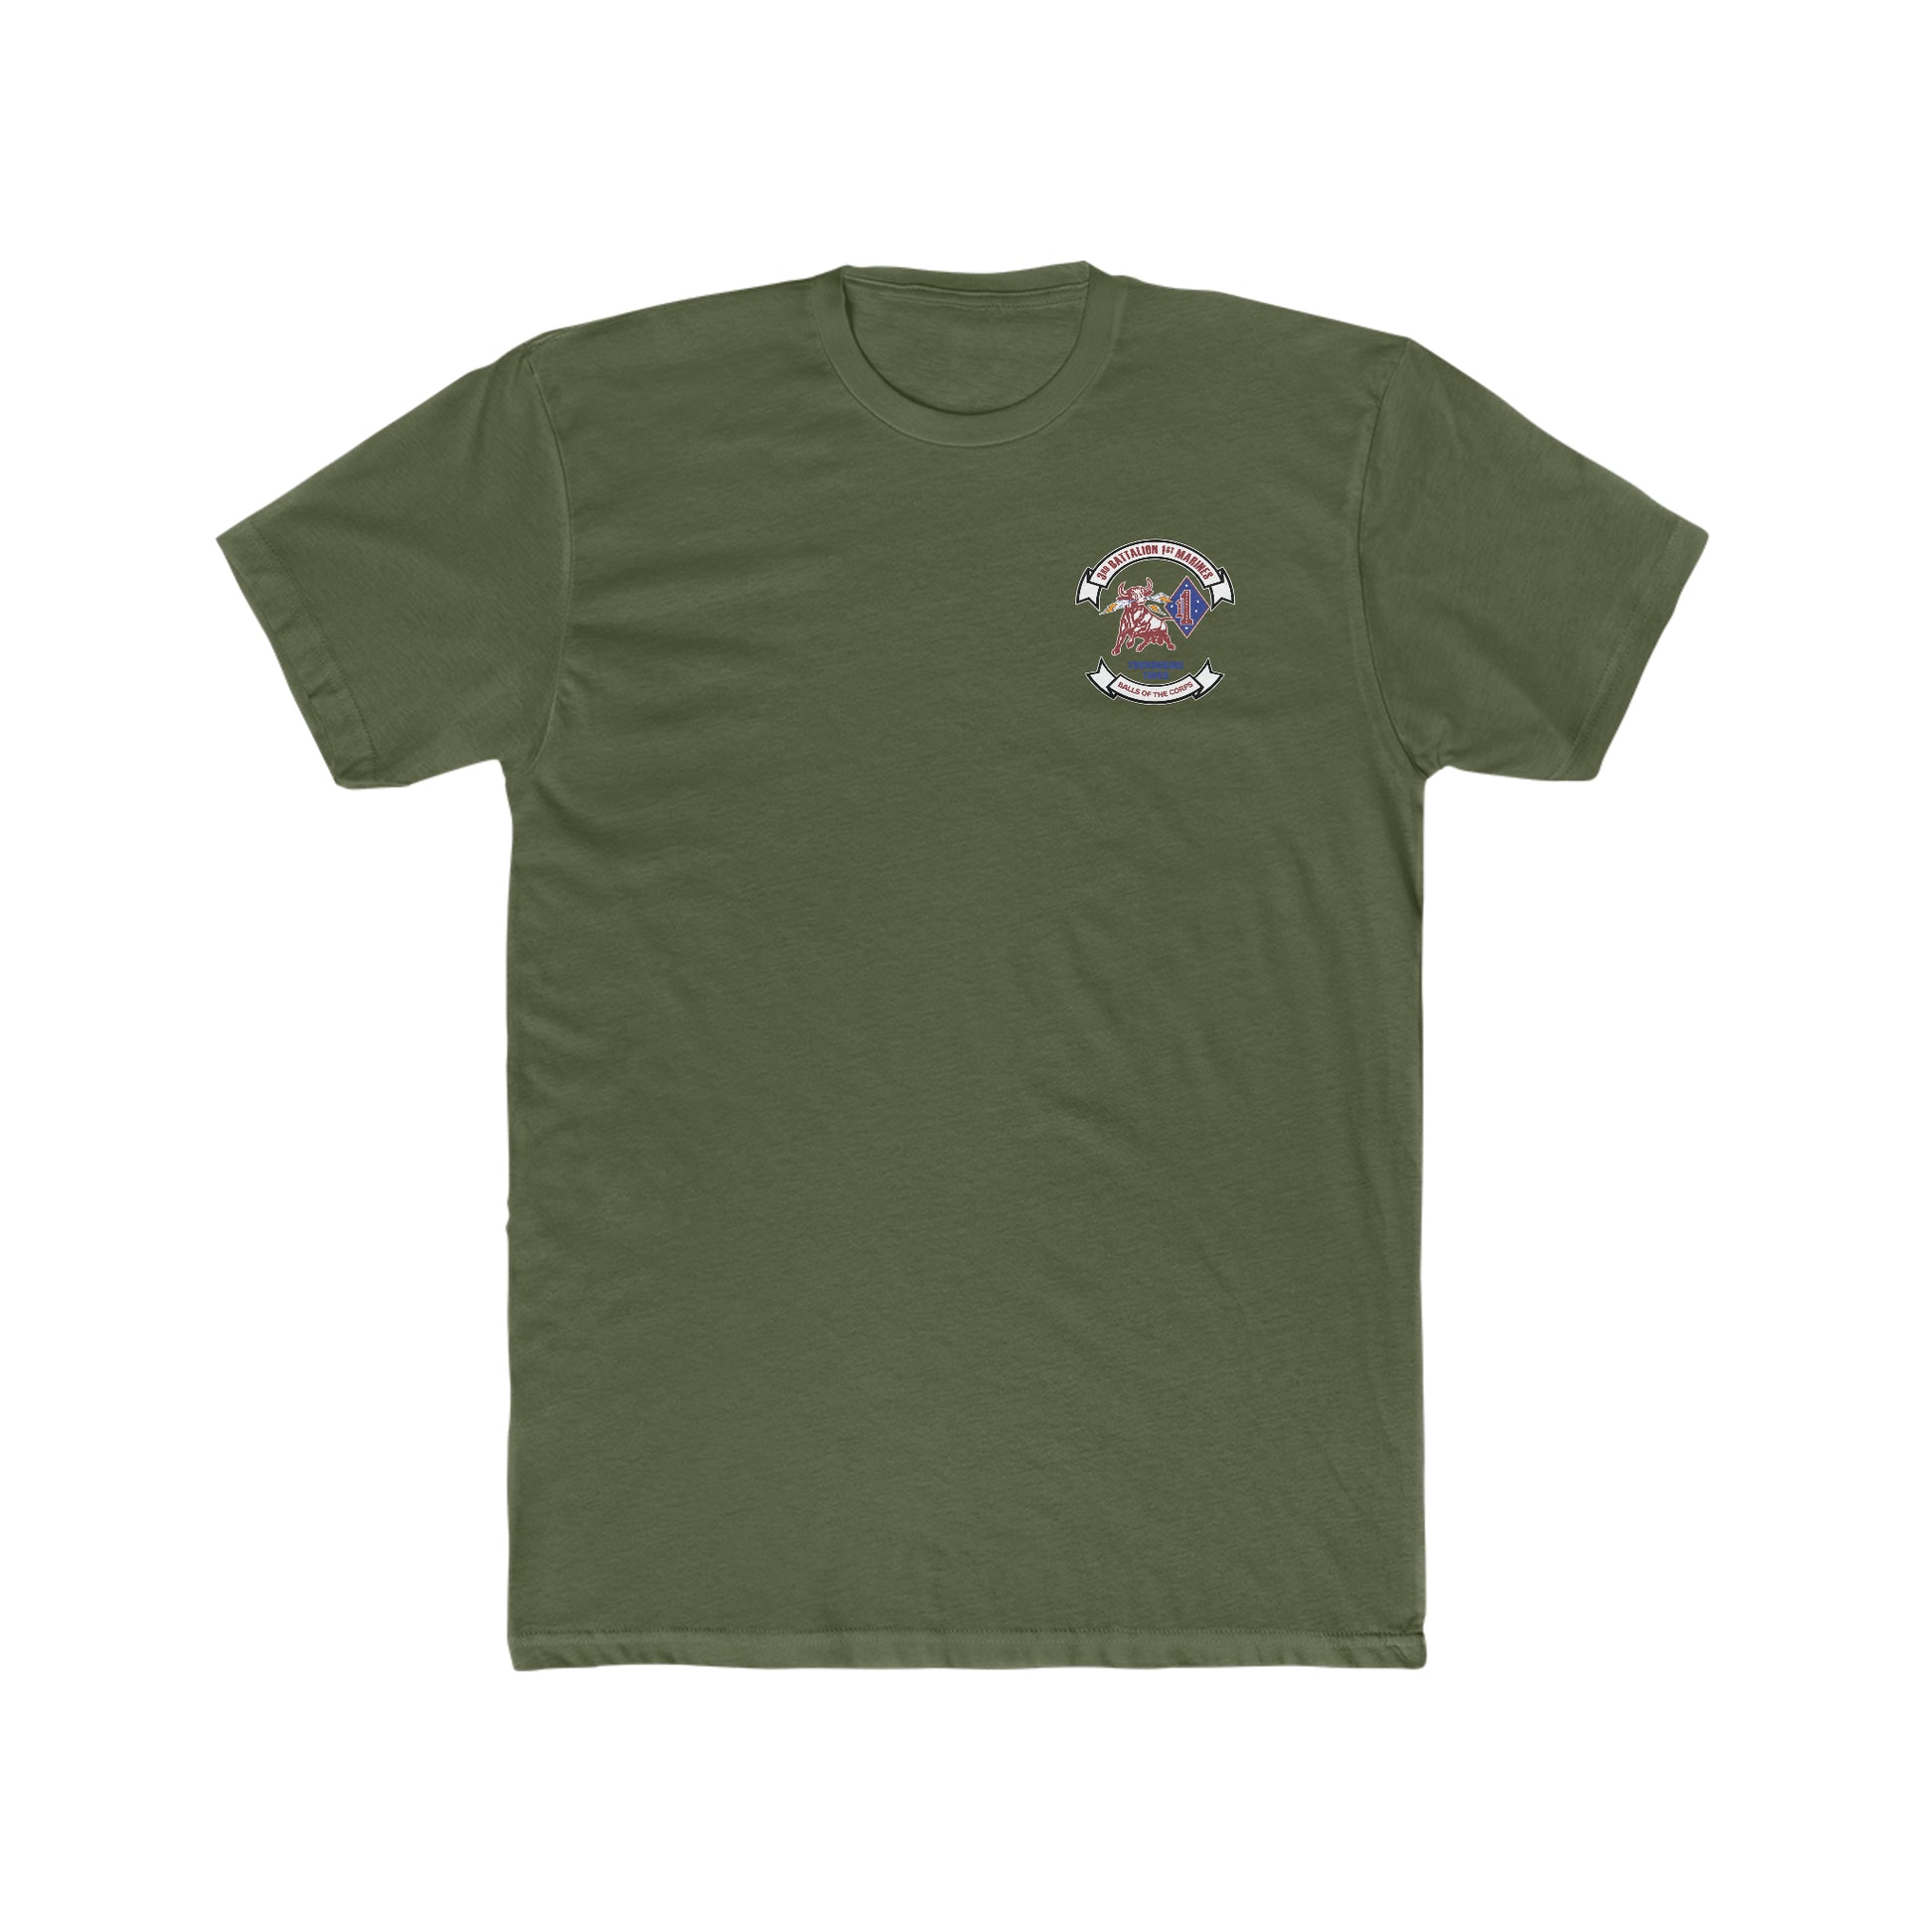 Military Green 3rd Battalion 1st Marines Shirt